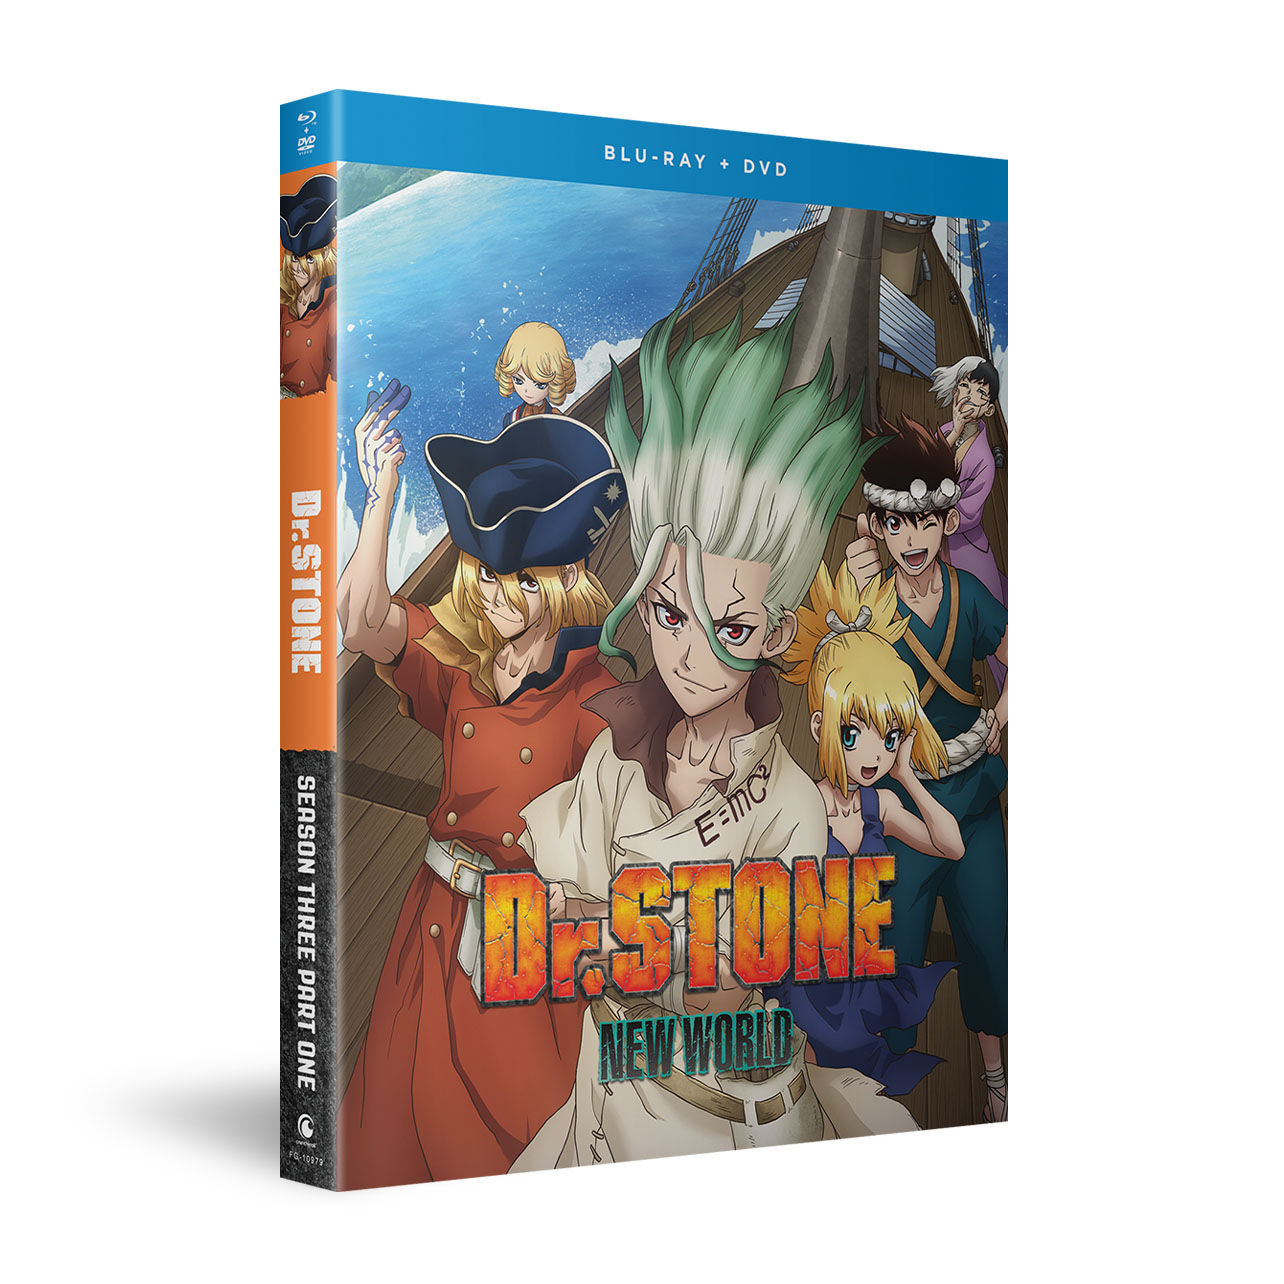 Dr. STONE - Season 3 Part 1 - Blu-ray + DVD | Crunchyroll Store